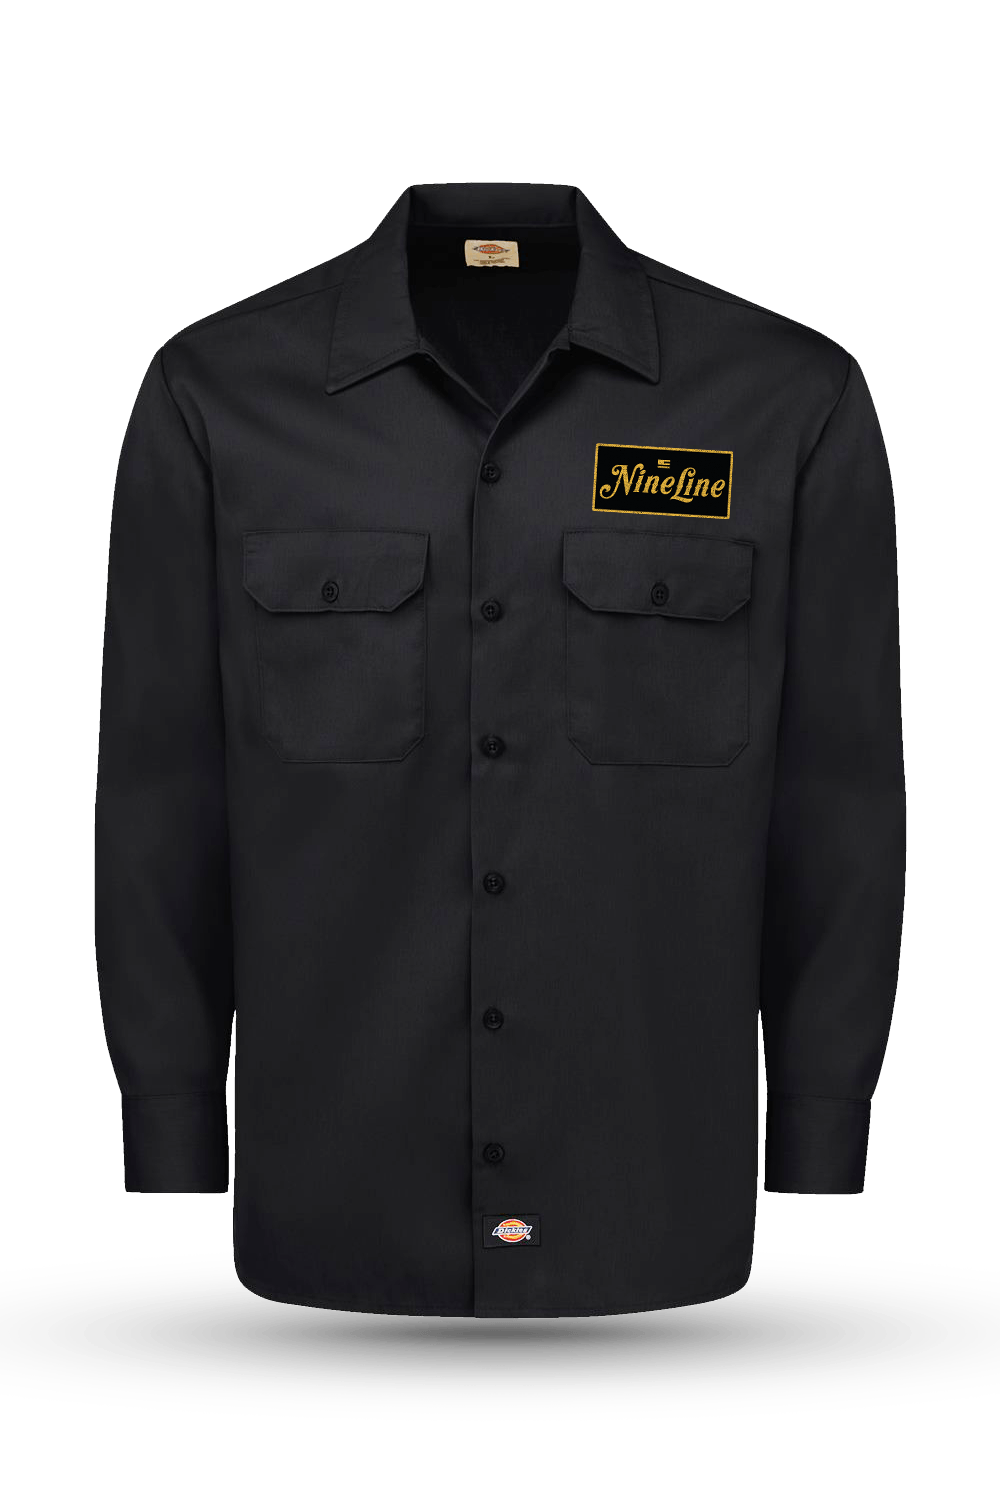 Corporate Dickies Work Shirts & Apparel